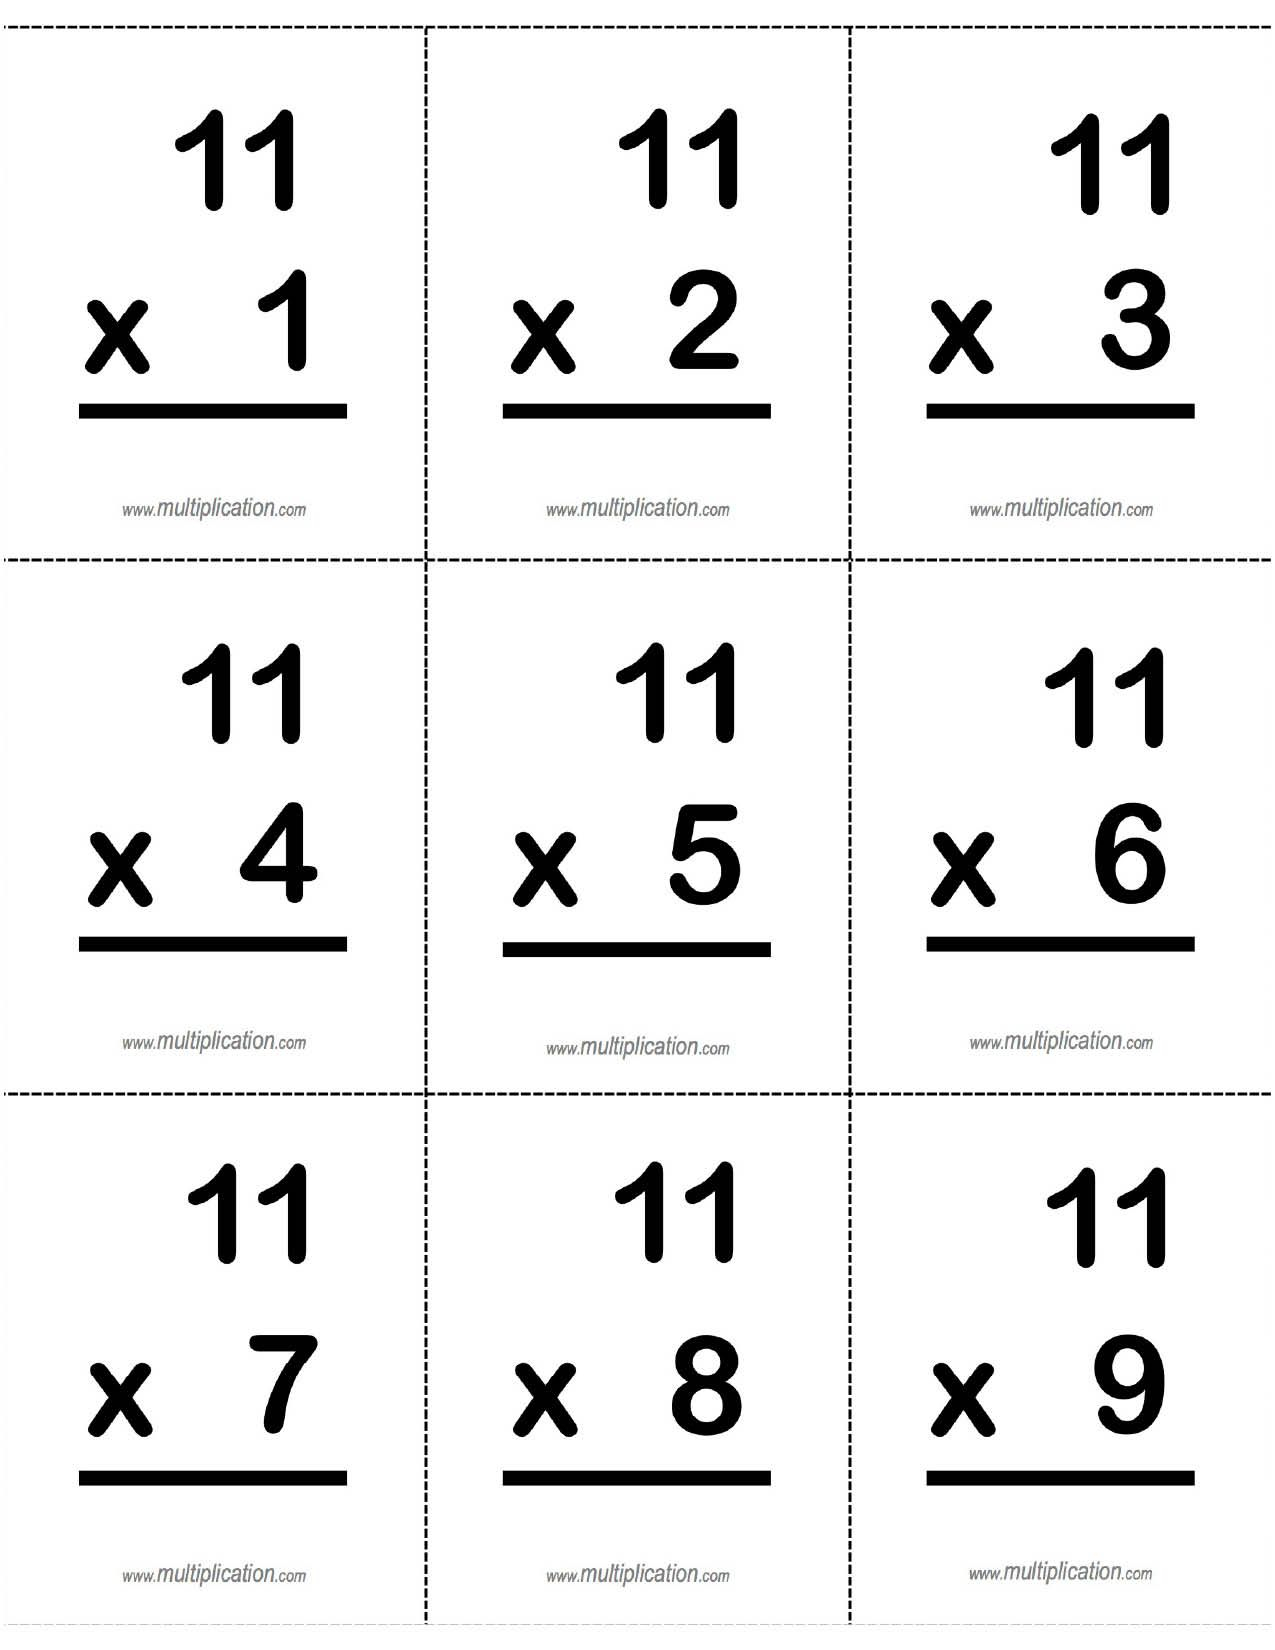 free-multiplication-flash-cards-printable-front-and-back-printablemultiplication